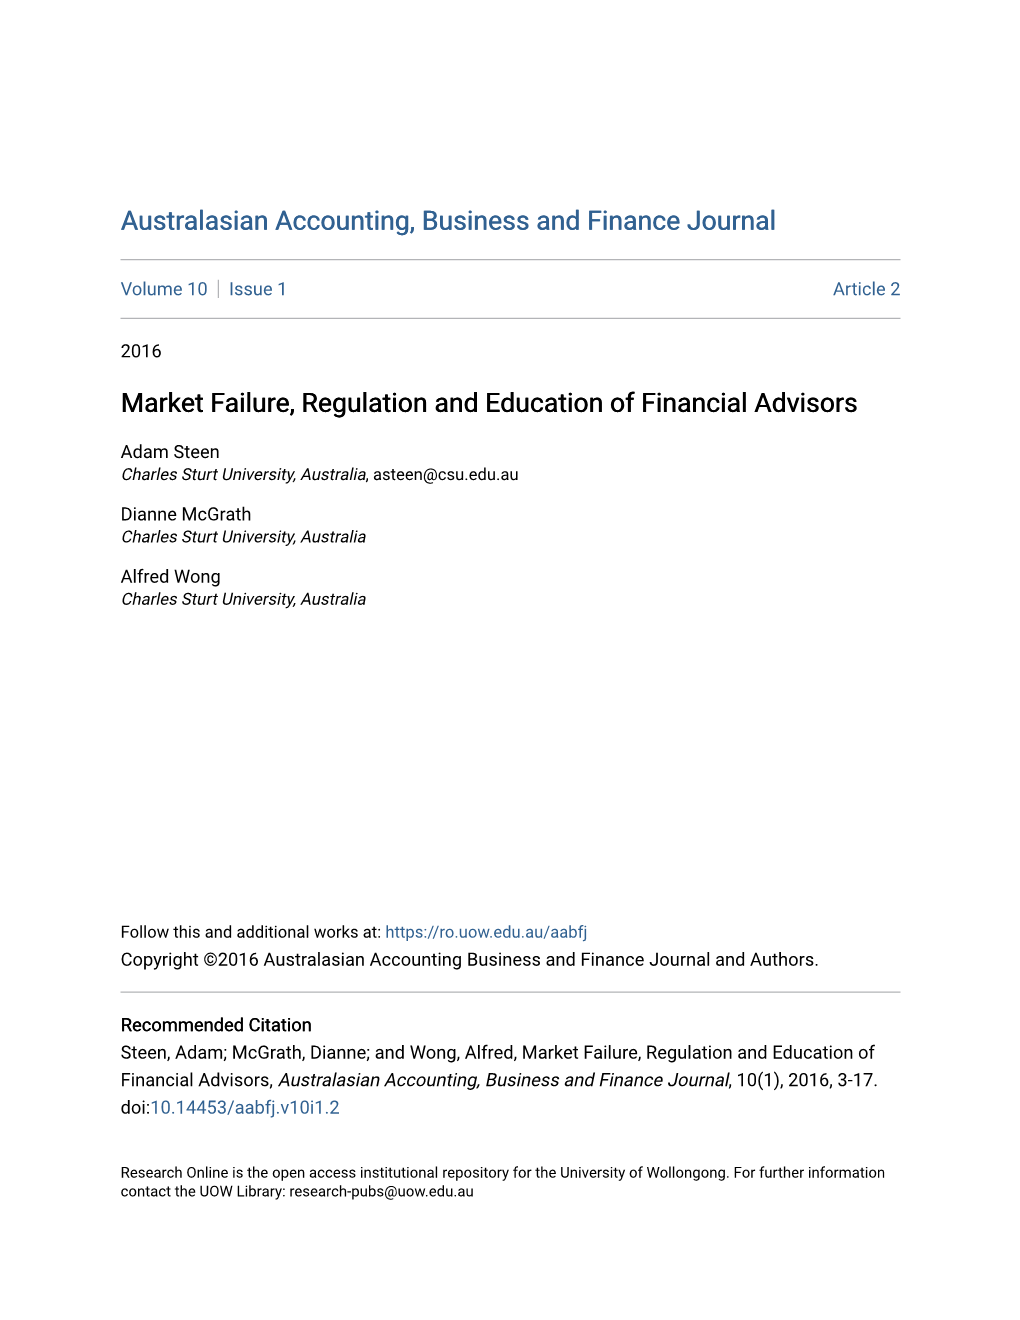 Market Failure, Regulation and Education of Financial Advisors